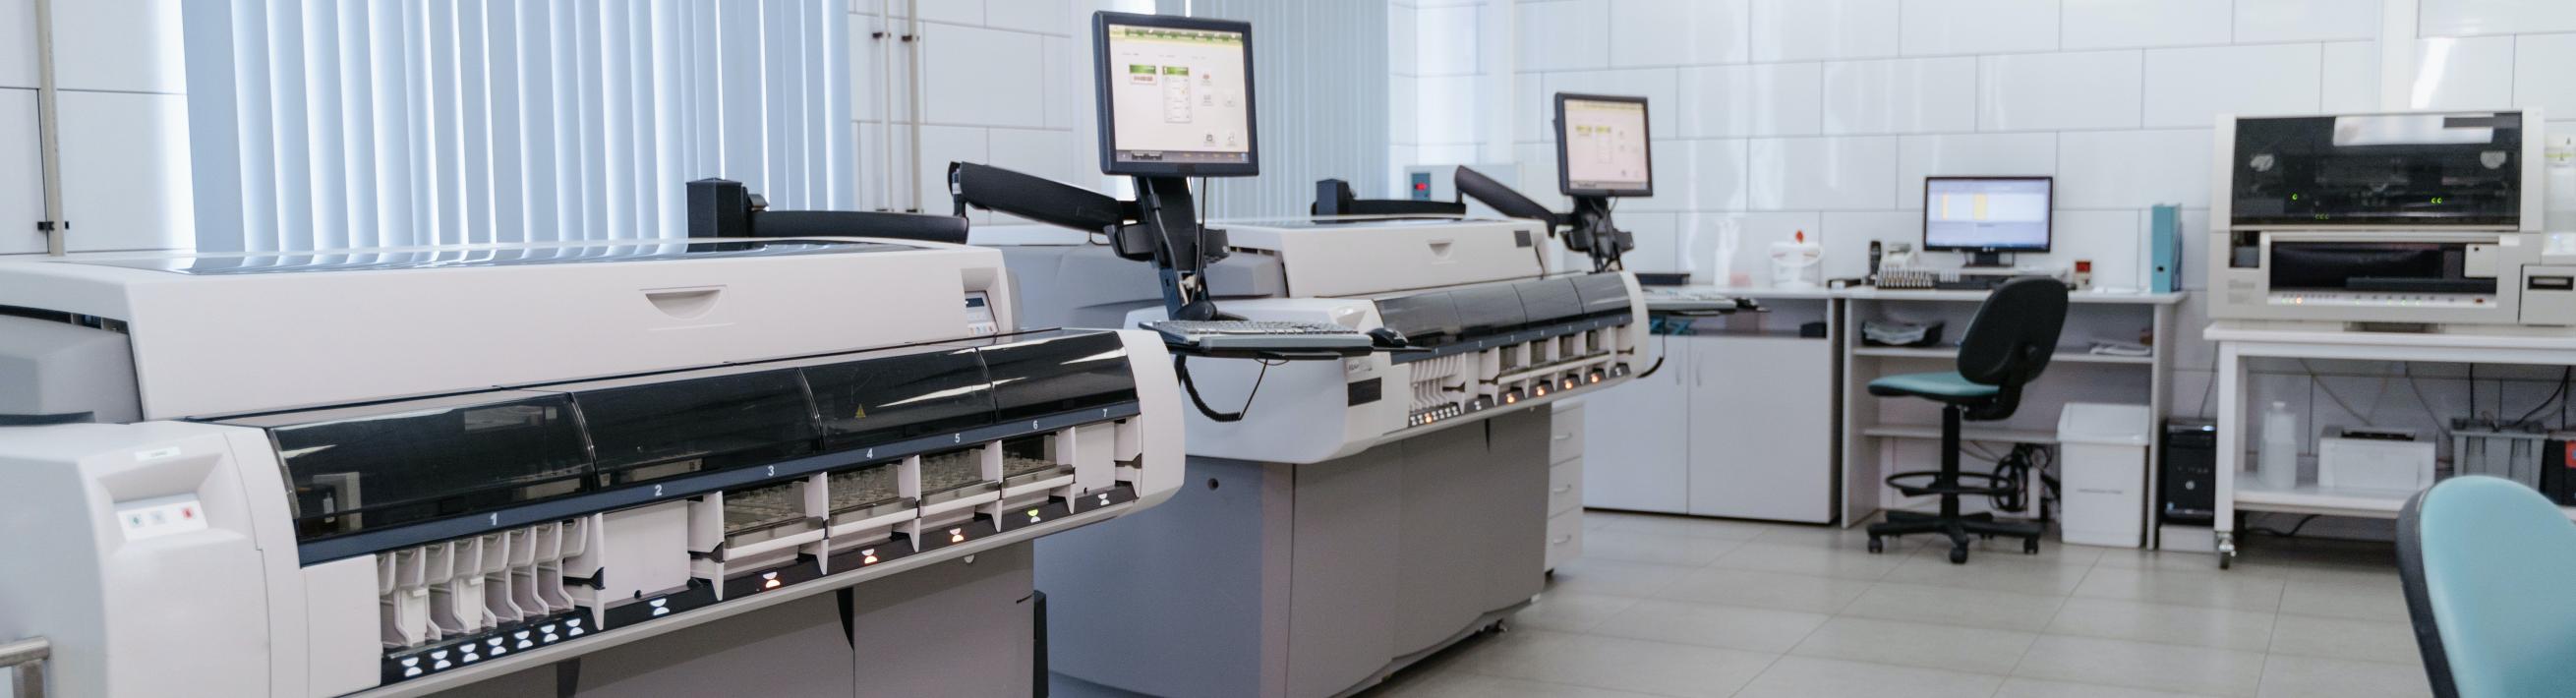 Two large printing machines